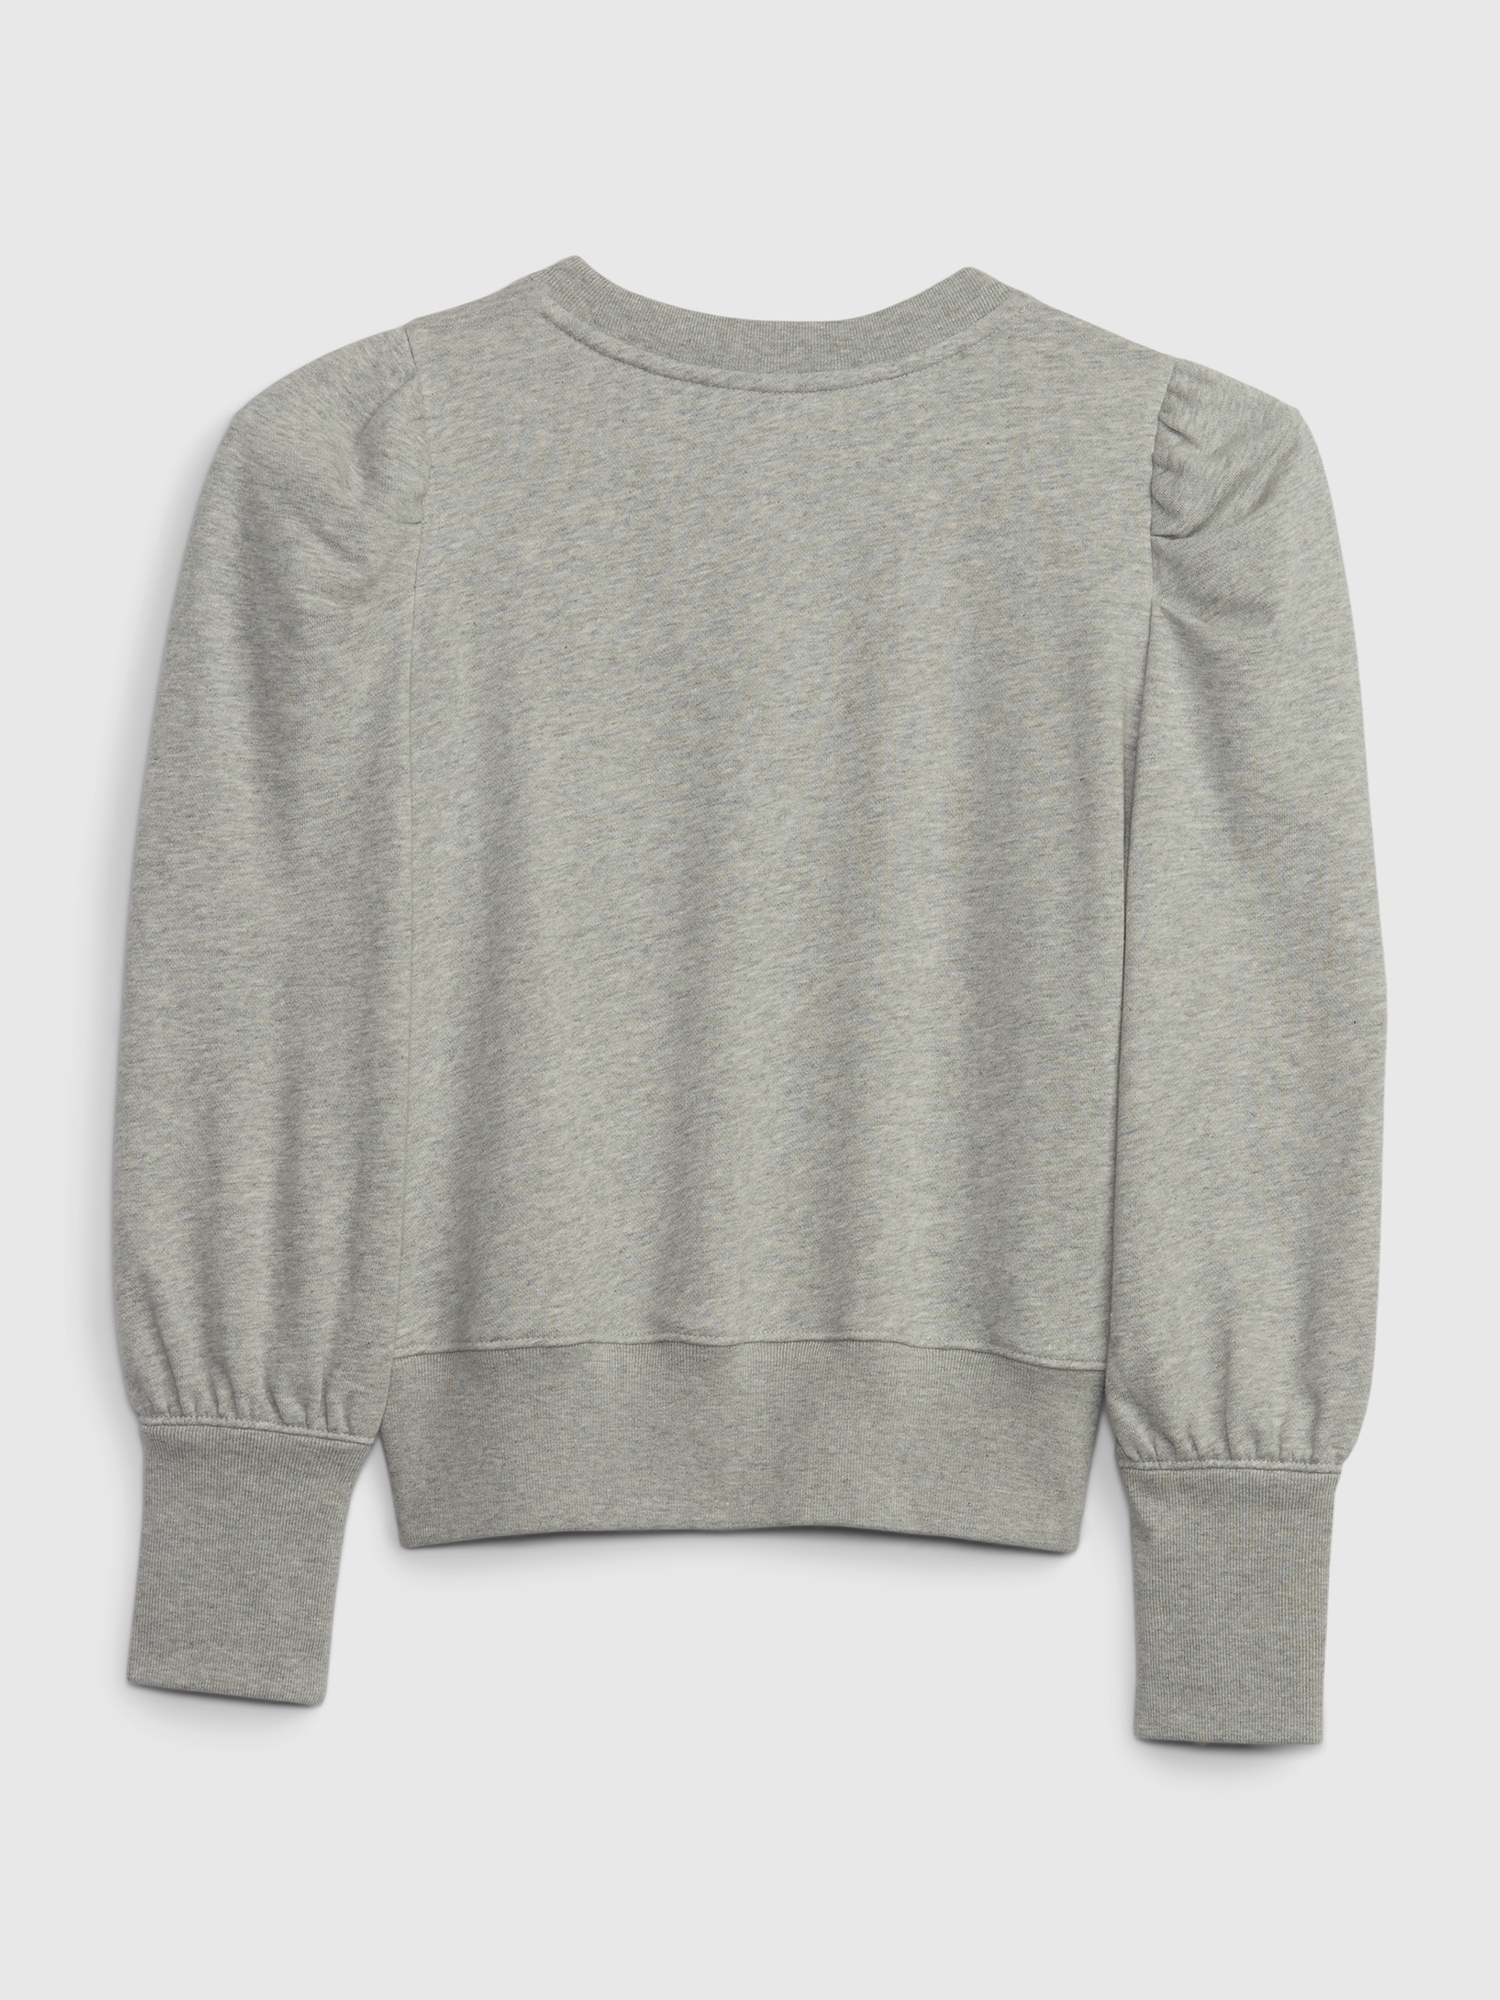 Kids Puff Sleeve Sweatshirt | Gap